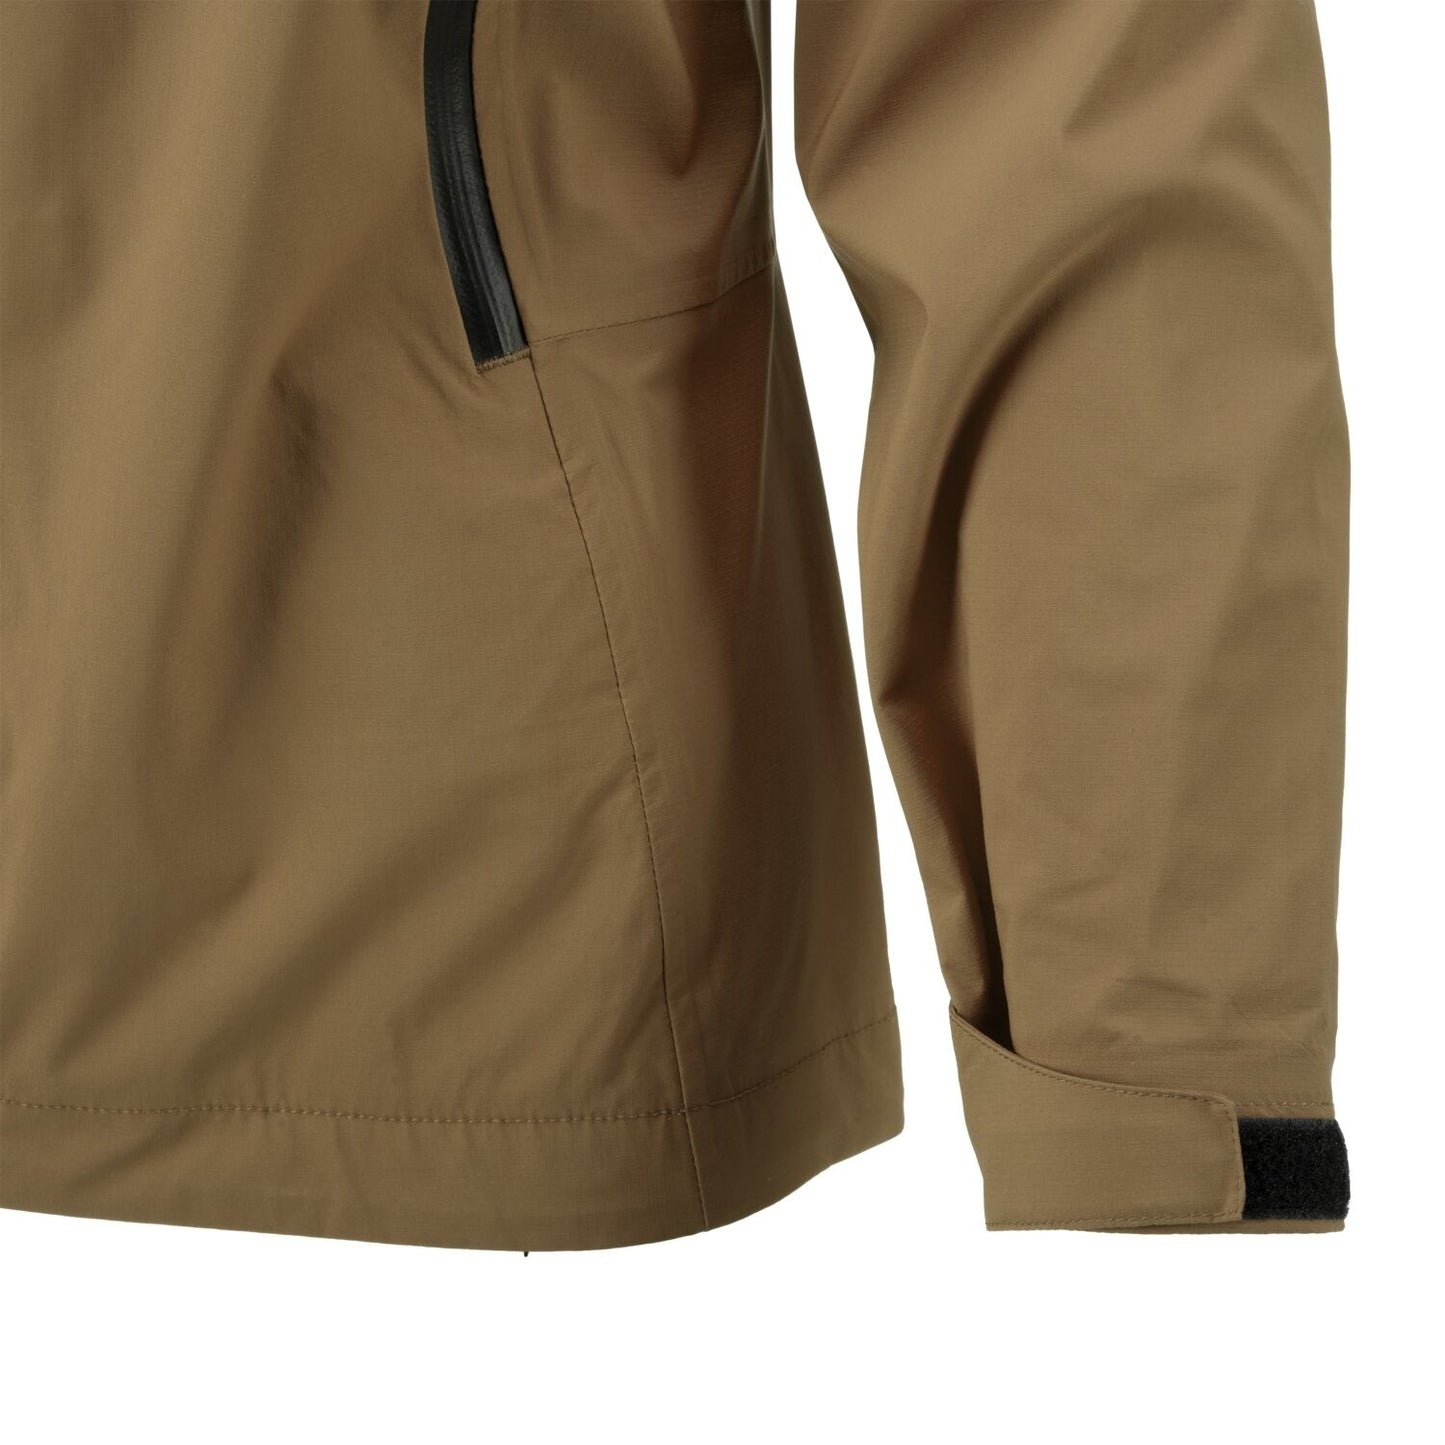 Helikon SQUALL Hardshell Jacket：Ultimate Weather Protection